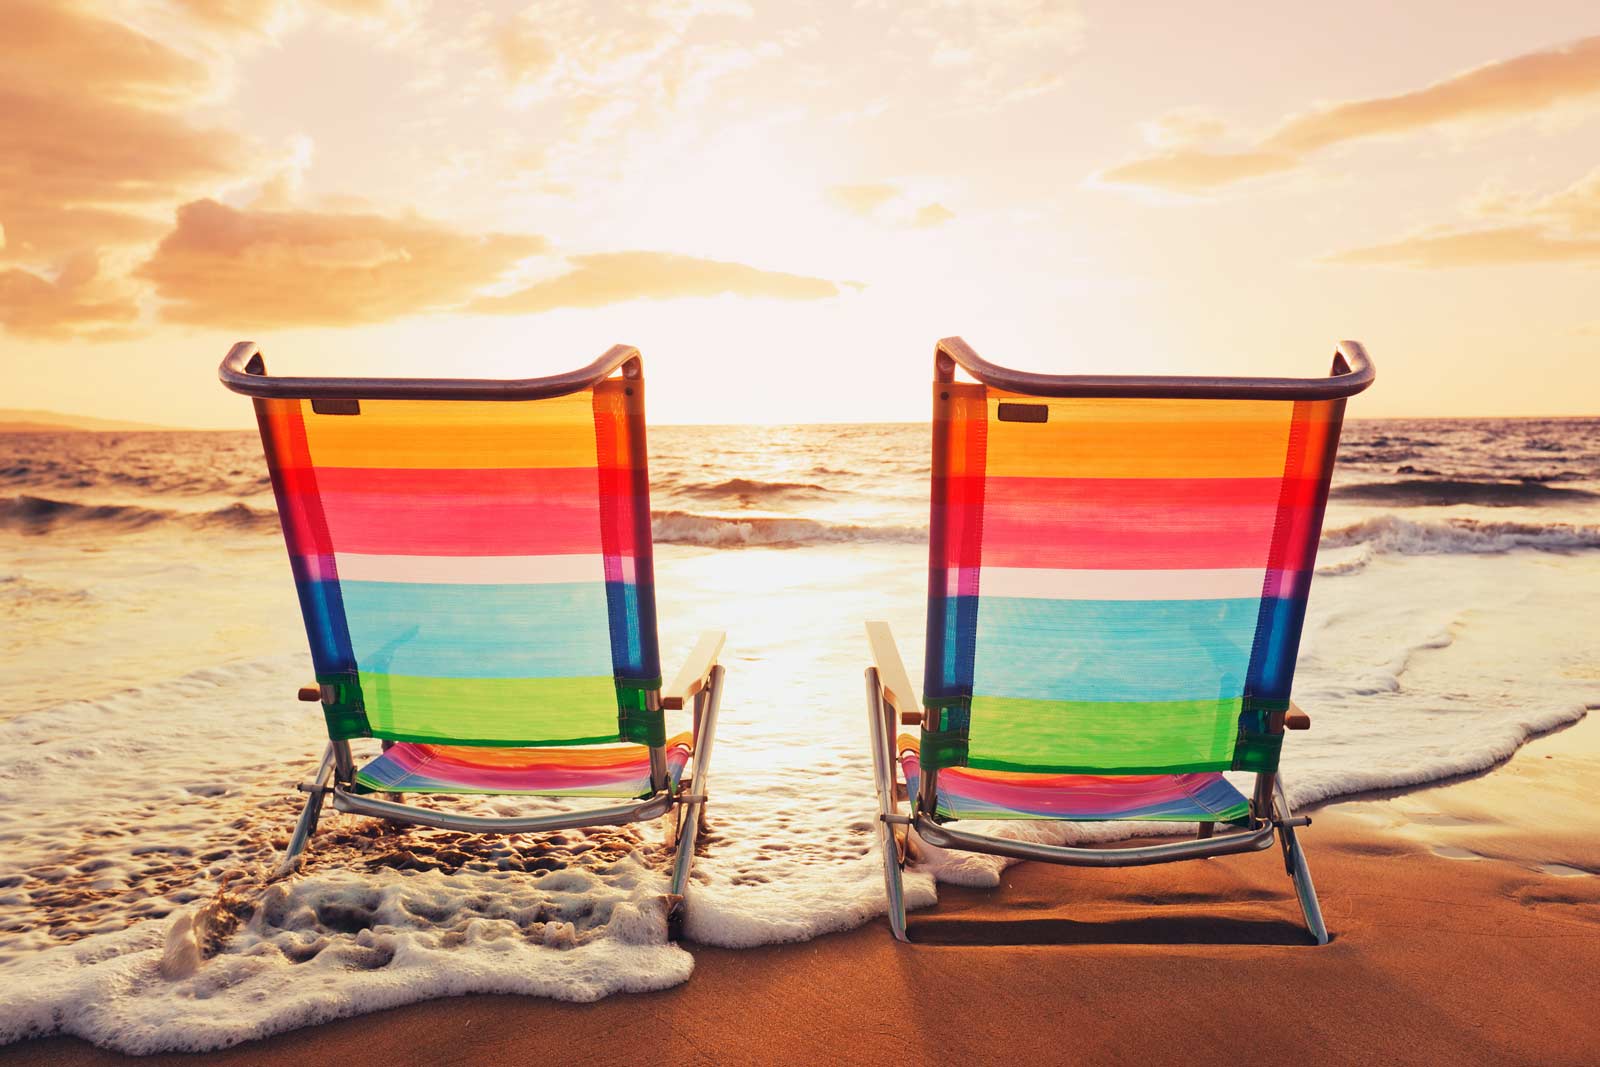 How Can a Muslim Enjoy Summer at Beaches?